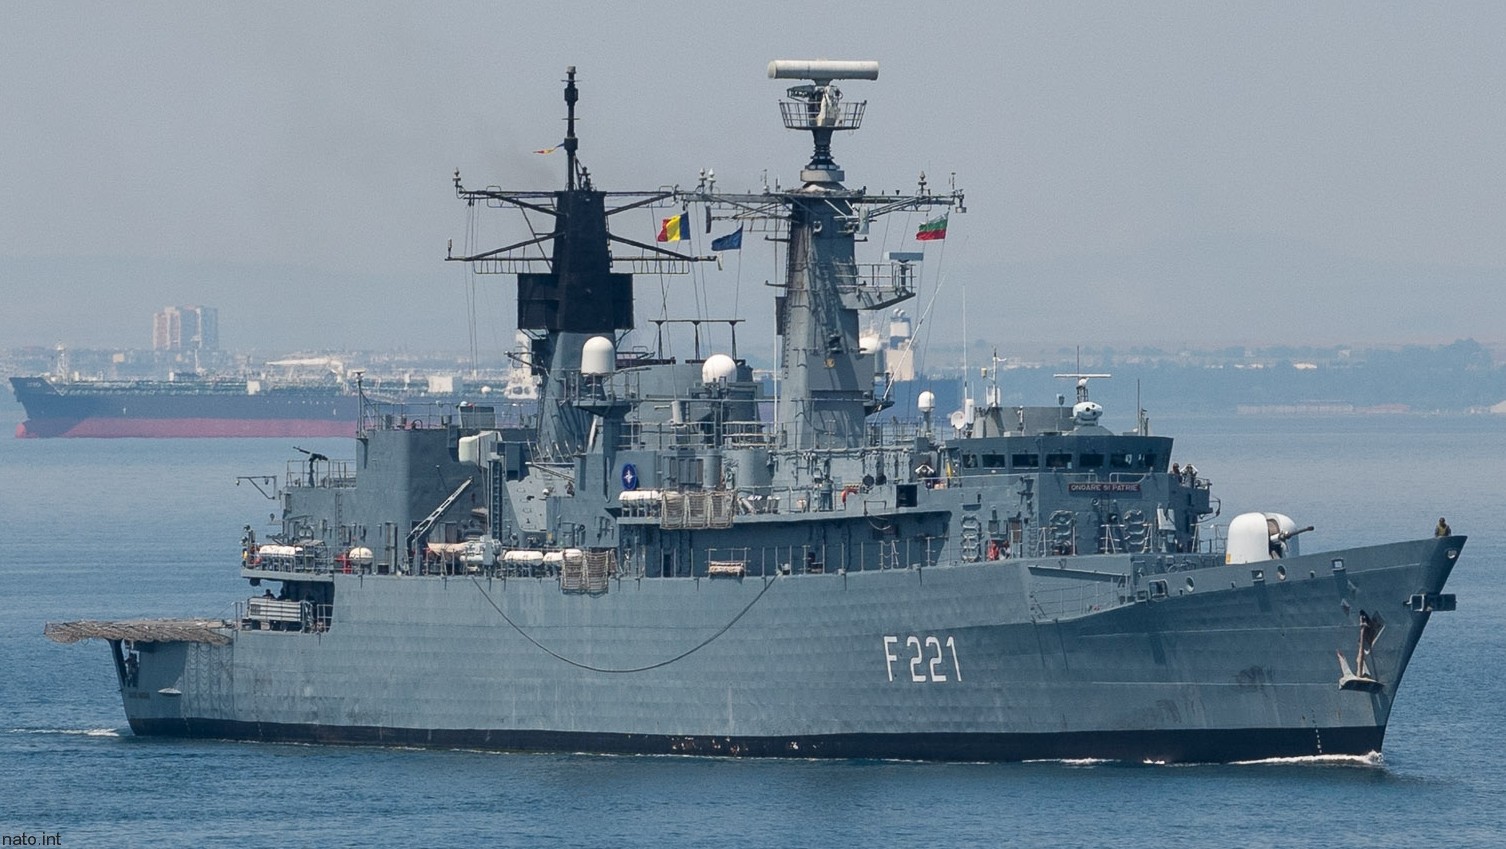 f-221 ros regele ferdinand frigate romanian navy type 22 broadsword class ex f-98 hms coventry 09x